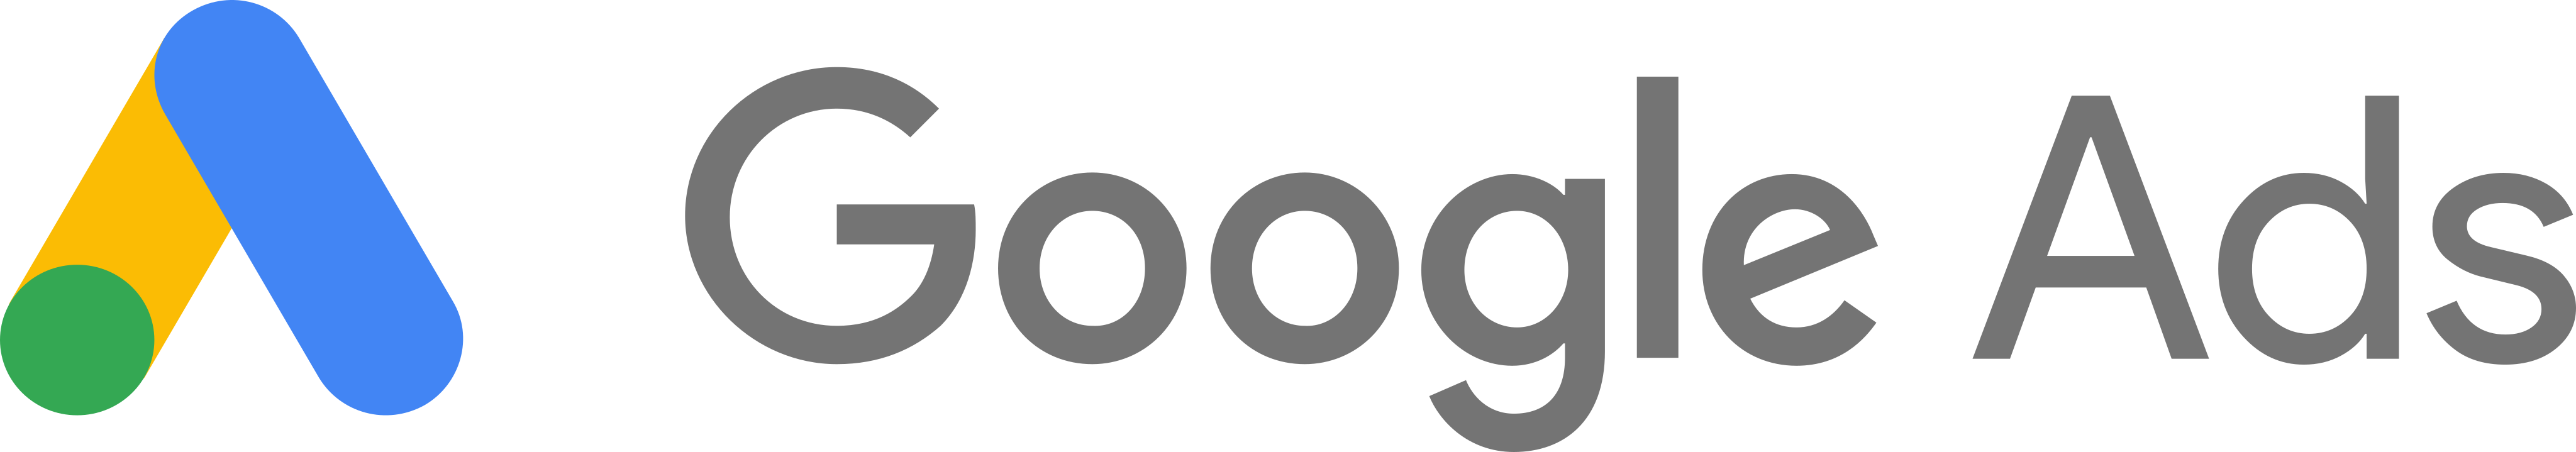 google-adwords-logo.png